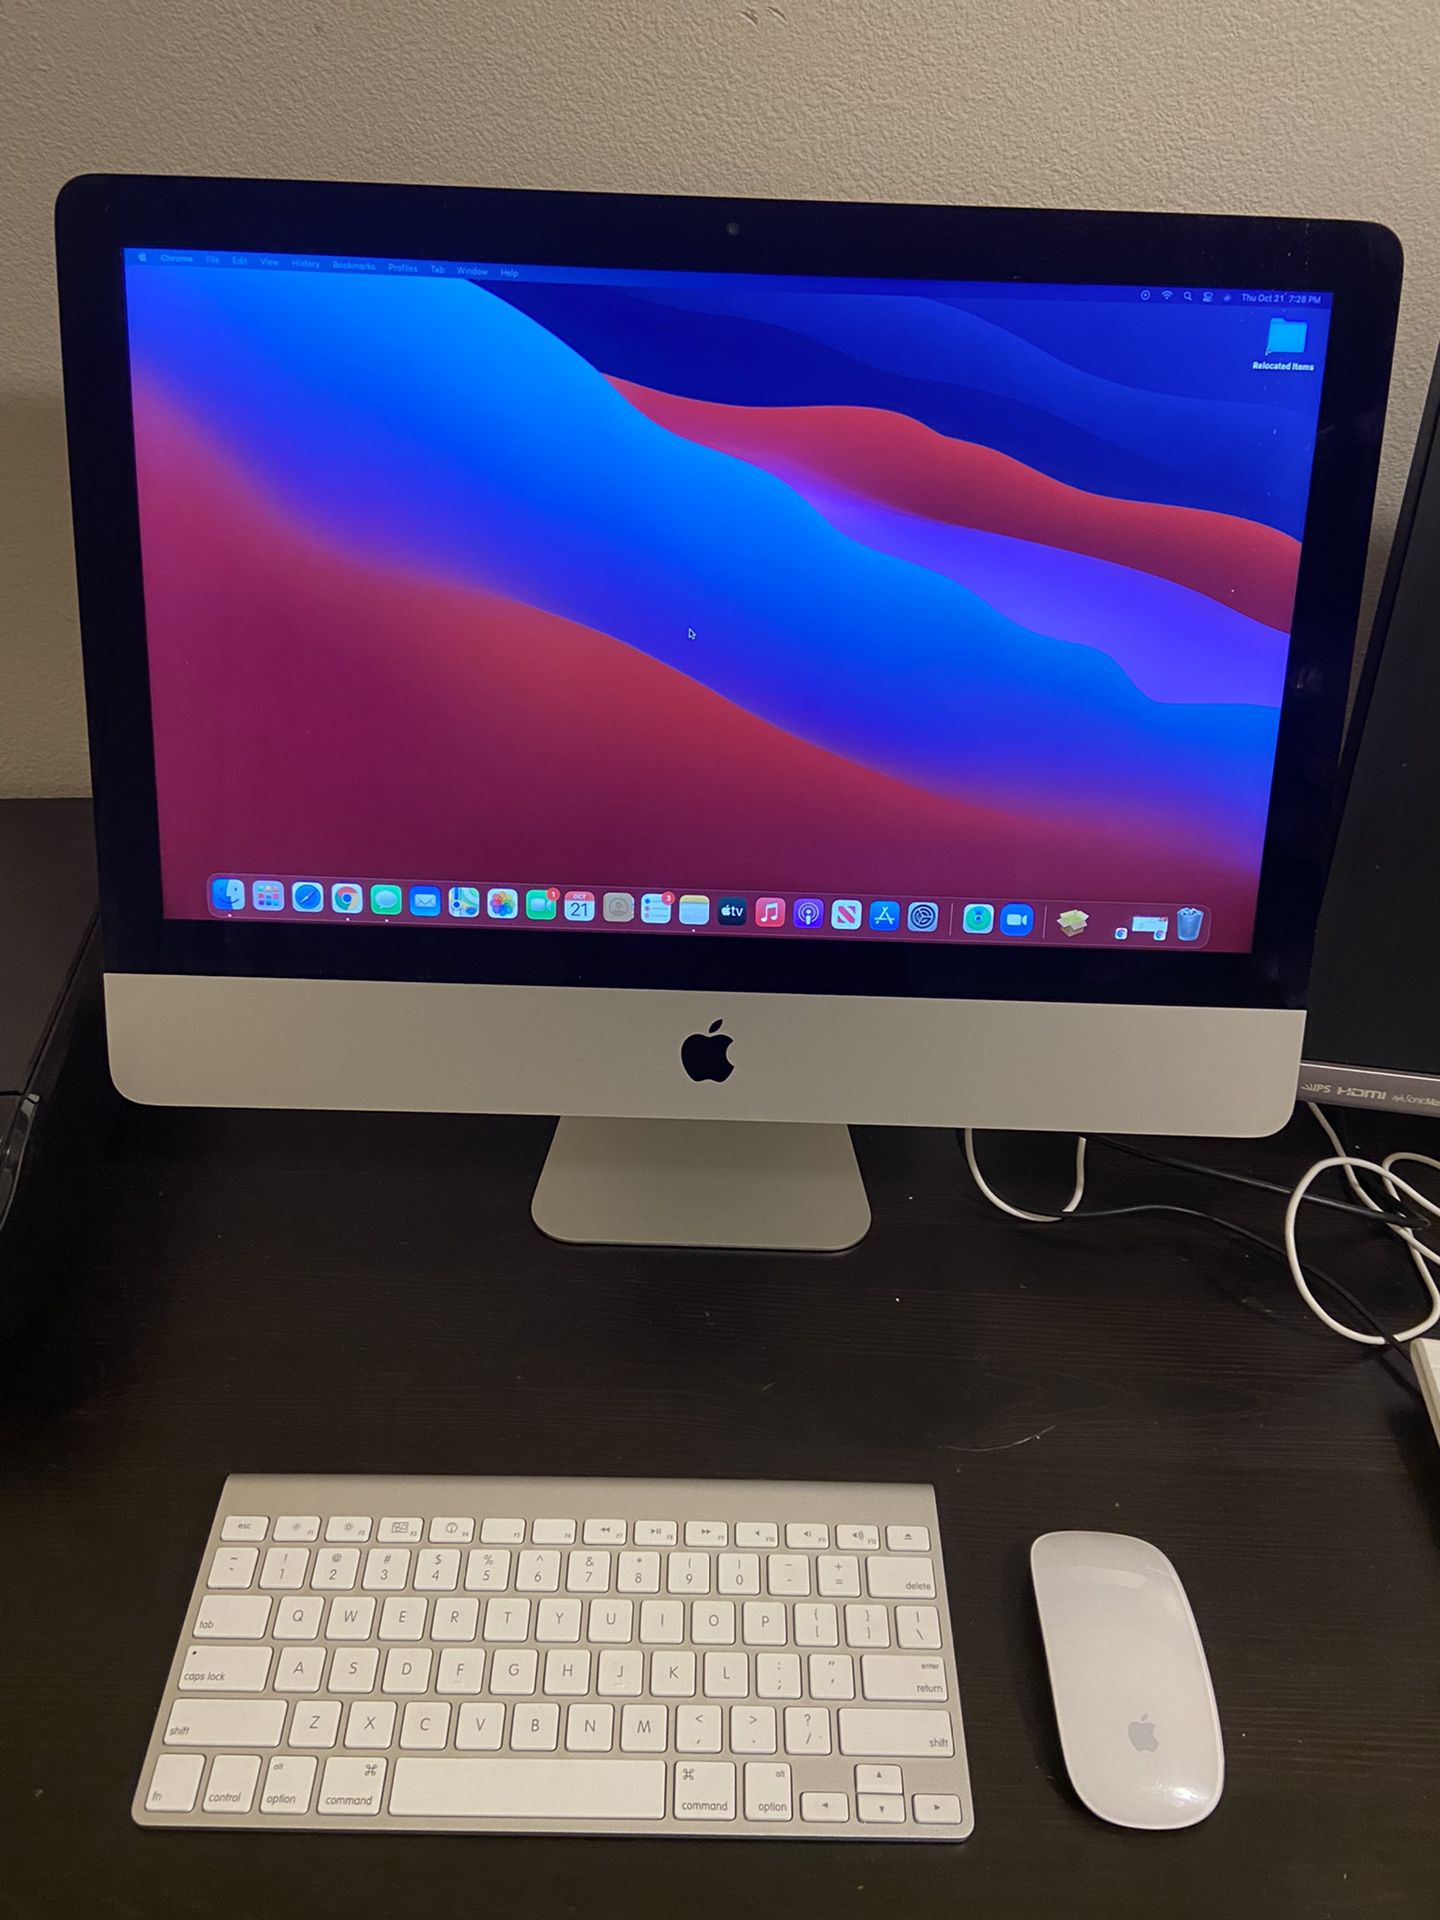 Apple’s iMac 21.5” Late 2015